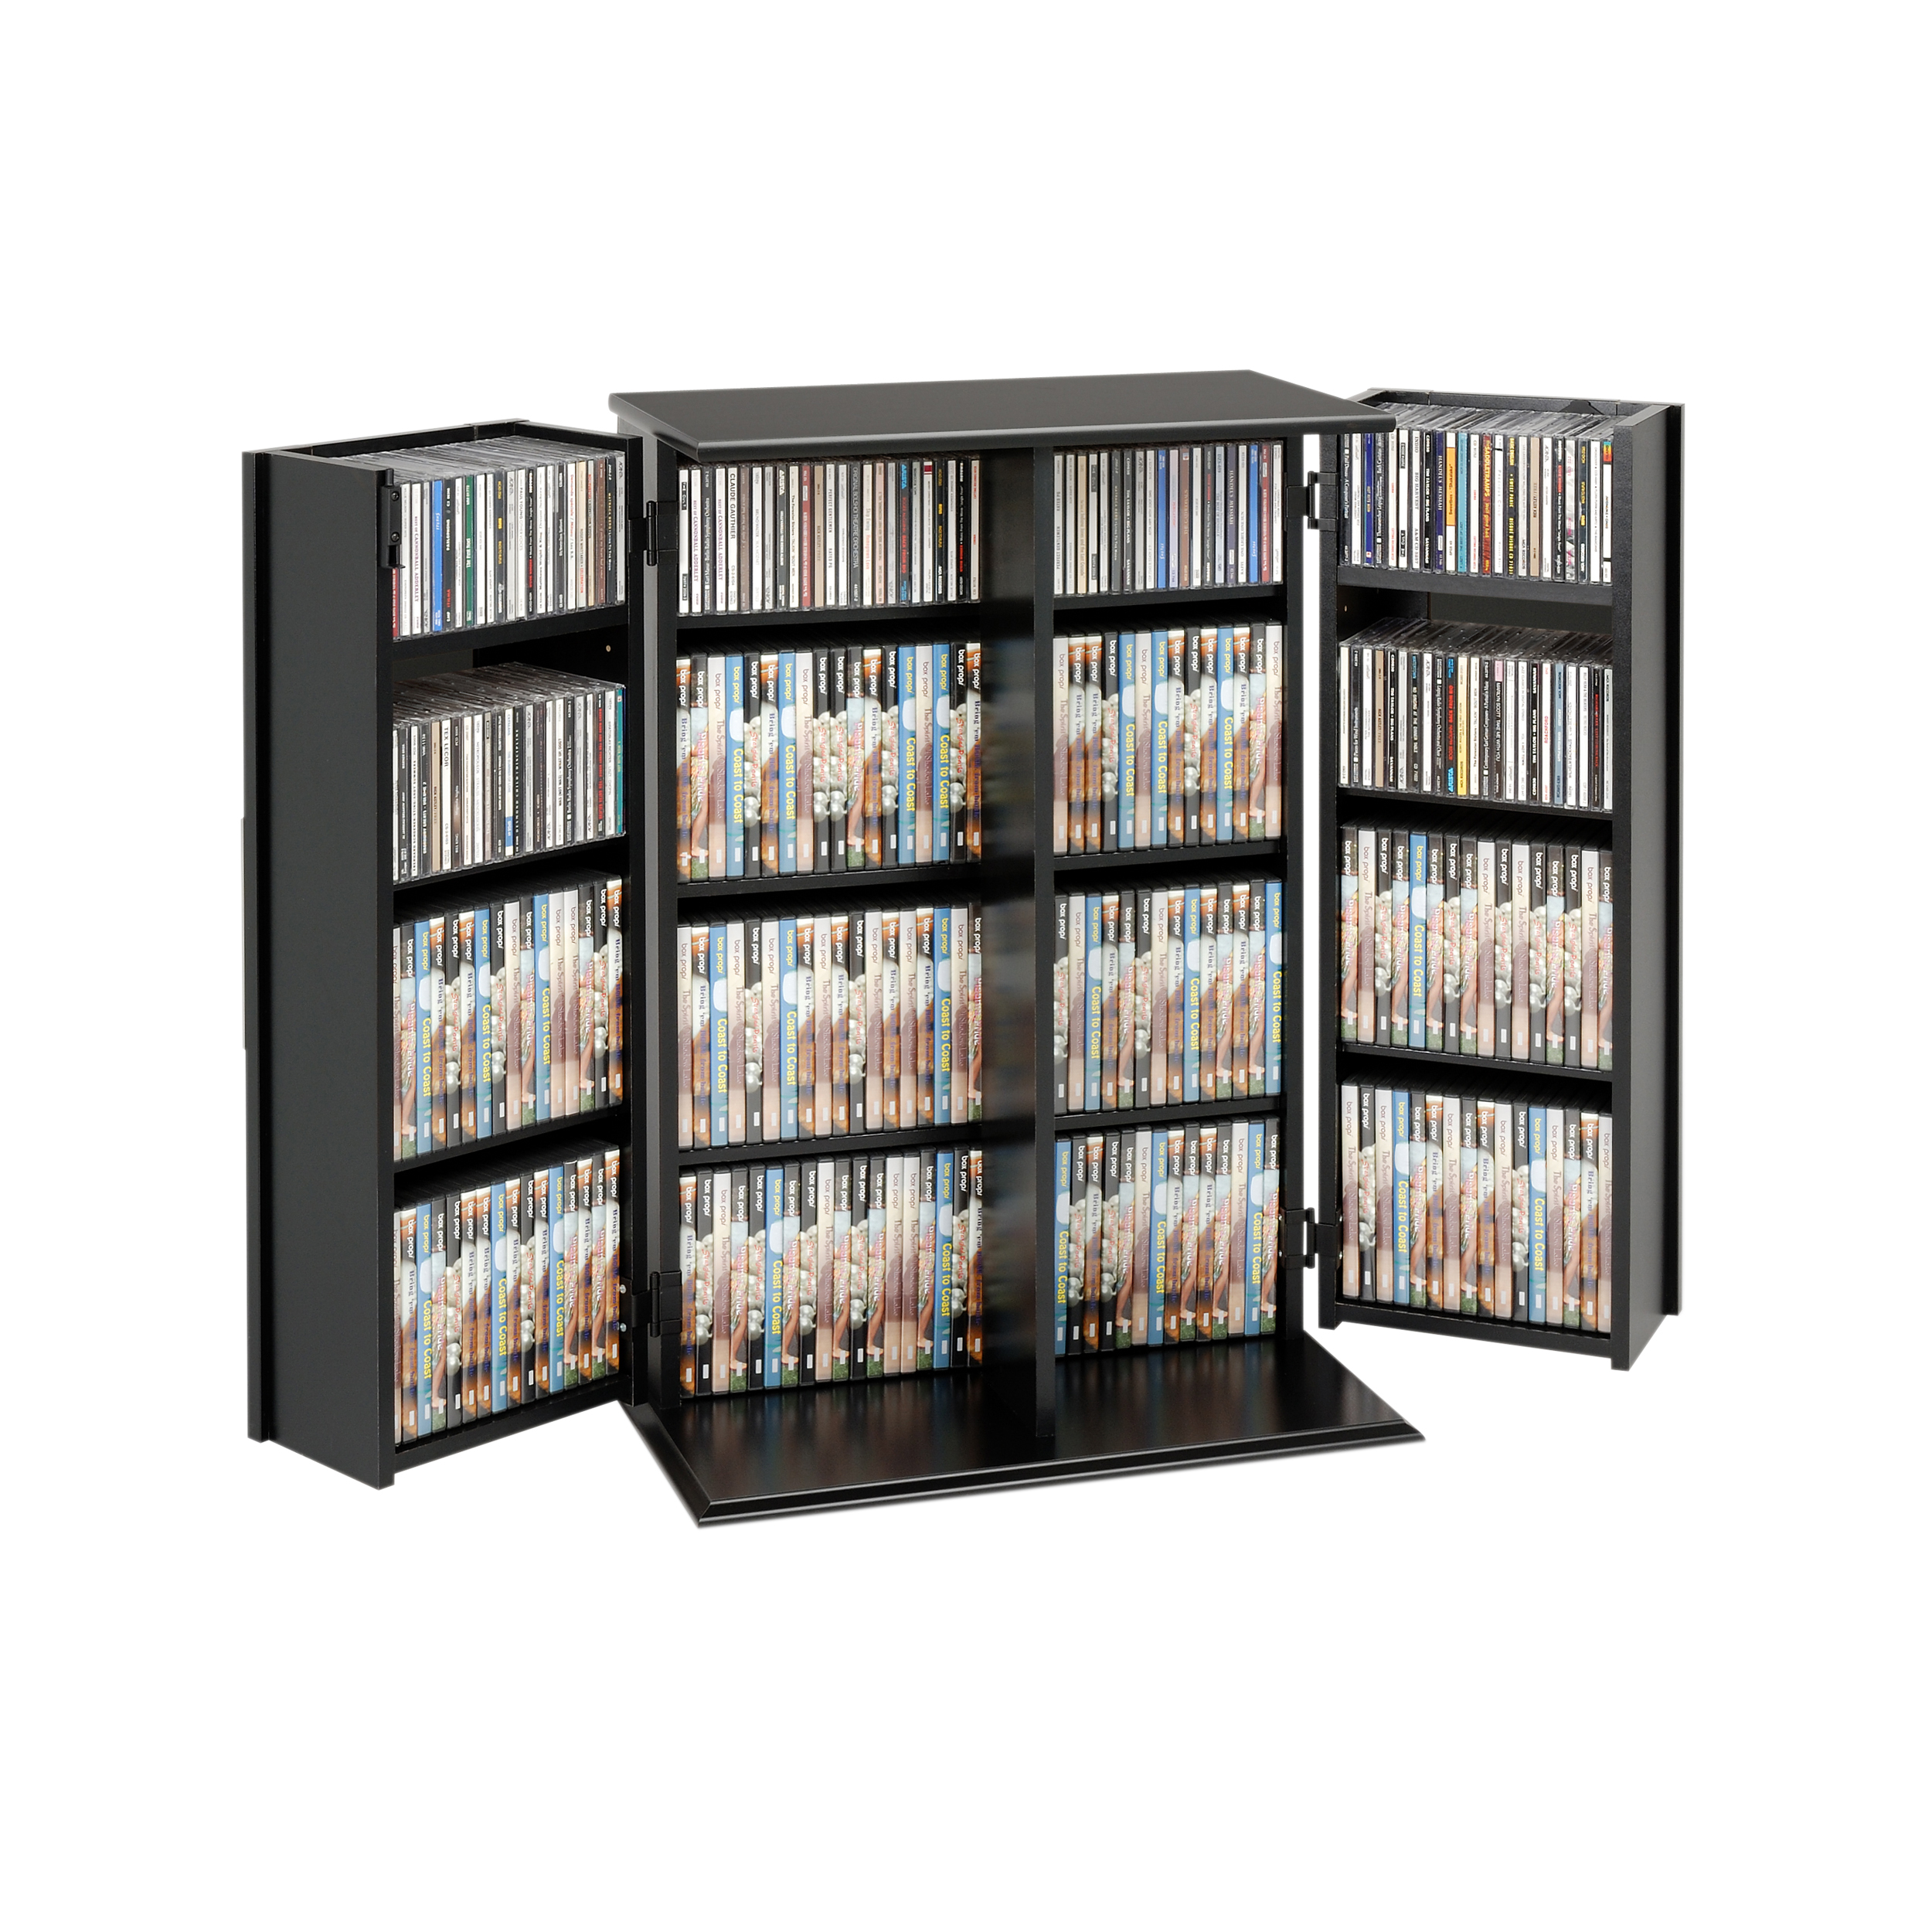 Prepac Locking Media Storage Cabinet with Shaker Doors, Black - image 3 of 6